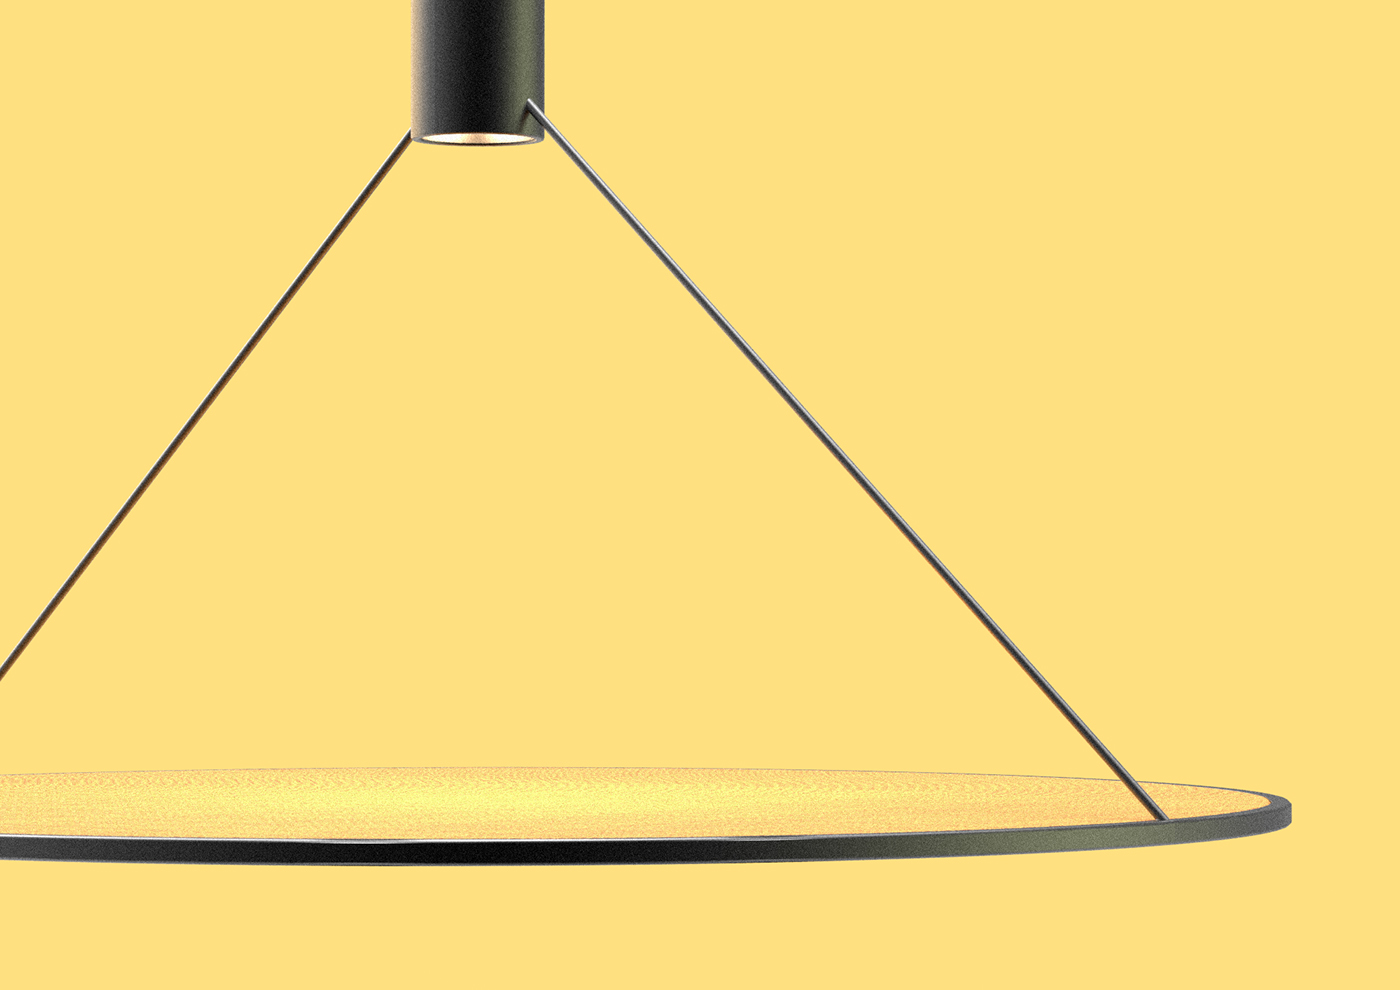 luminaire light floor lamp Ceiling lamp Lamp fabric simplicity Minimalism product family contemporary